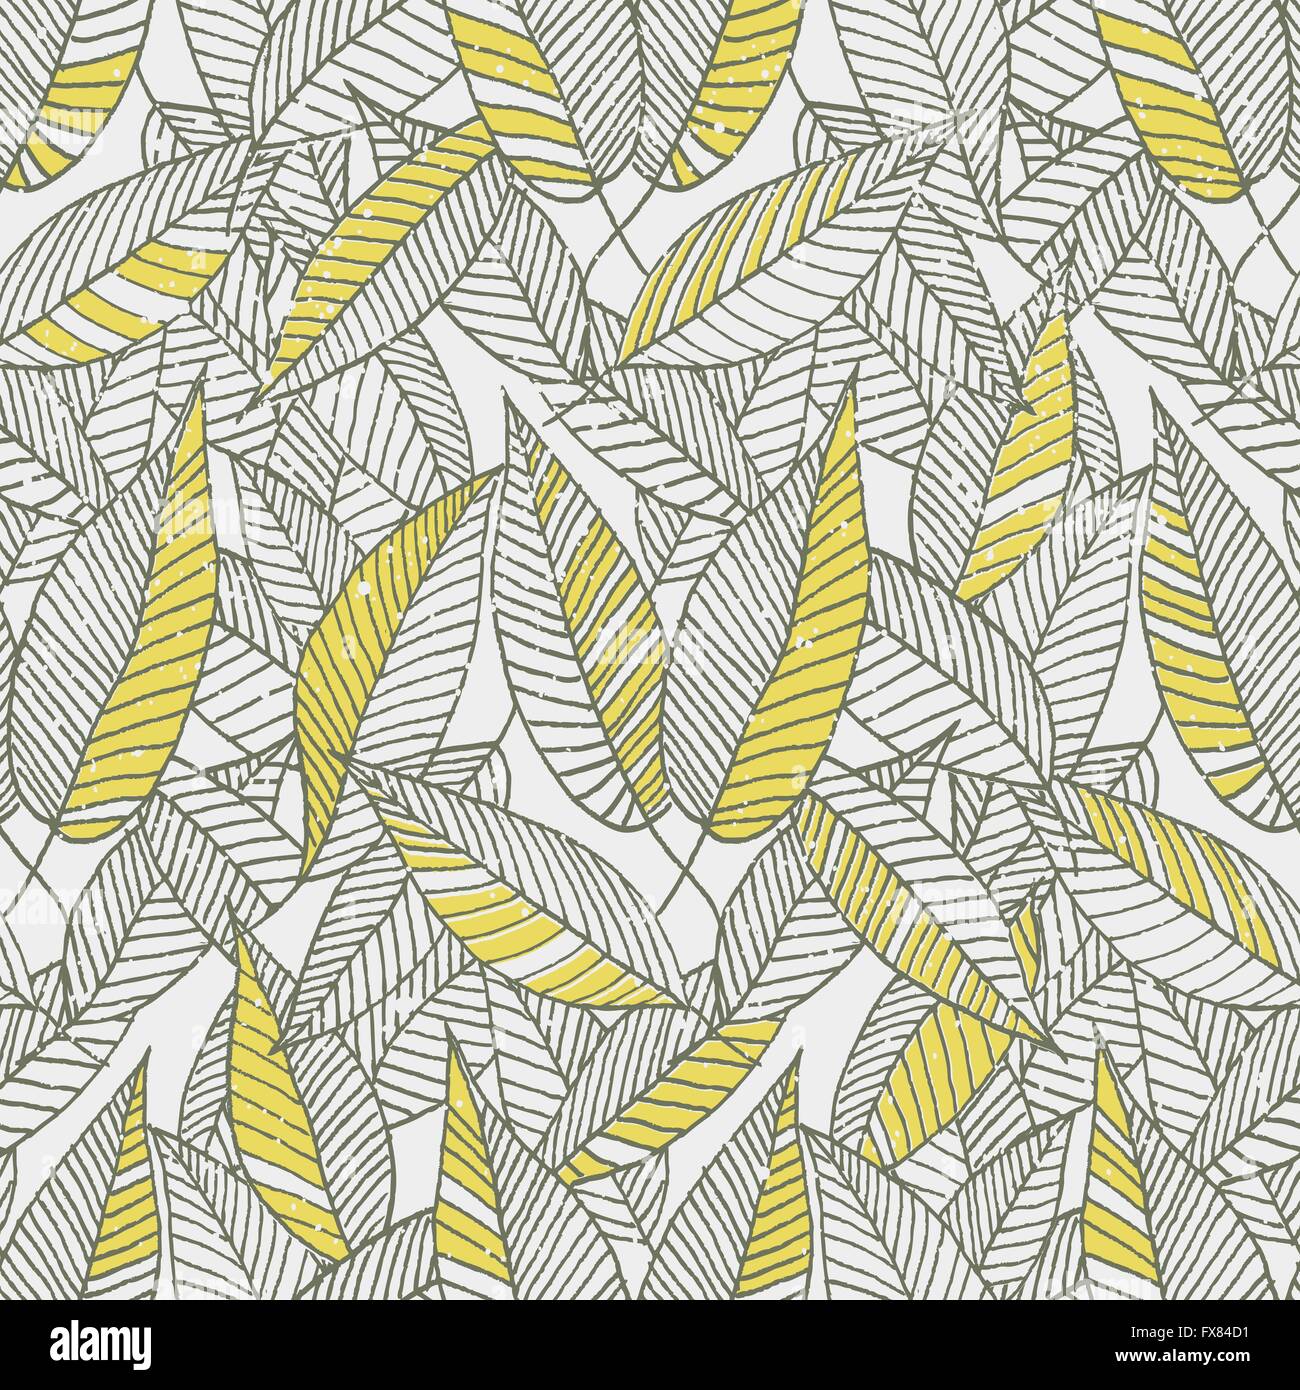 Nahtlose floralen Blattmuster. Blätter-Muster zu wiederholen. Handgemachte Vektor-illustration Stock Vektor